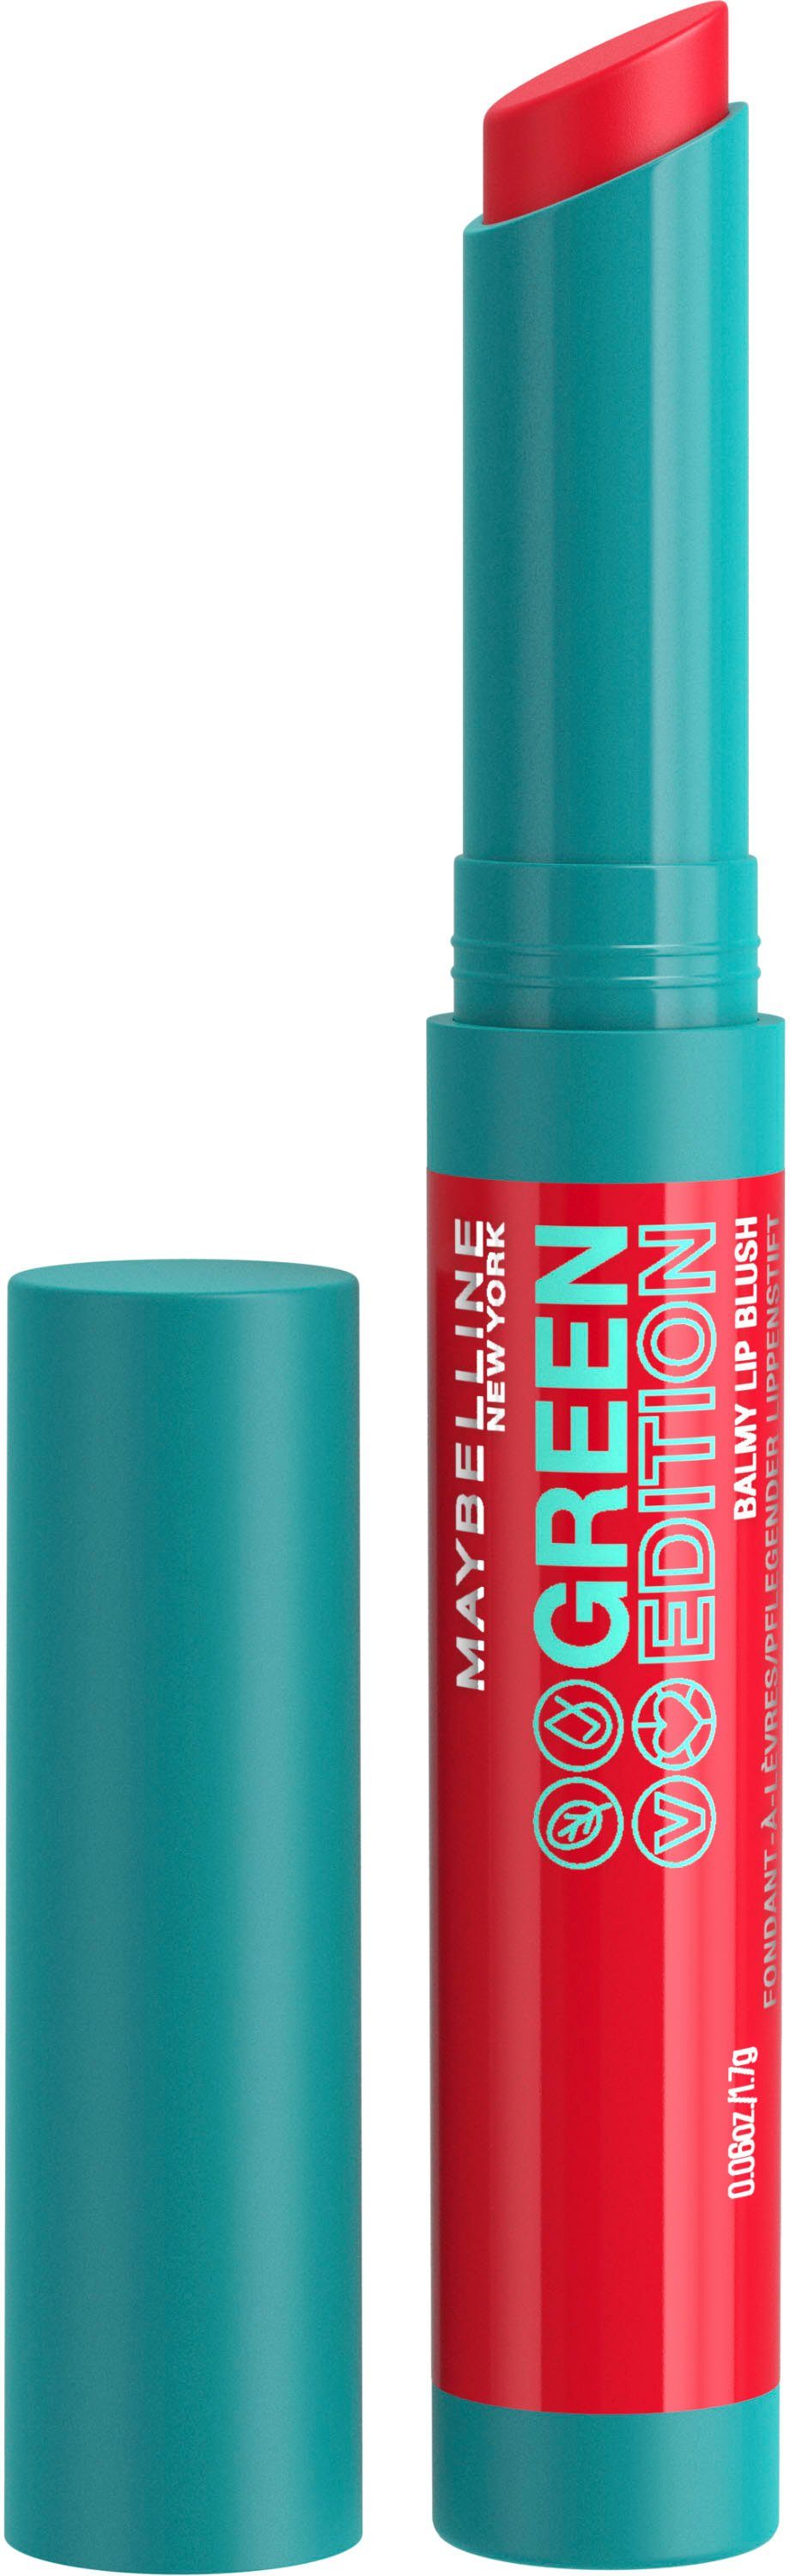 Lippenstift Blush Balmy Green 004 YORK Edition NEW MAYBELLINE Lip Flare